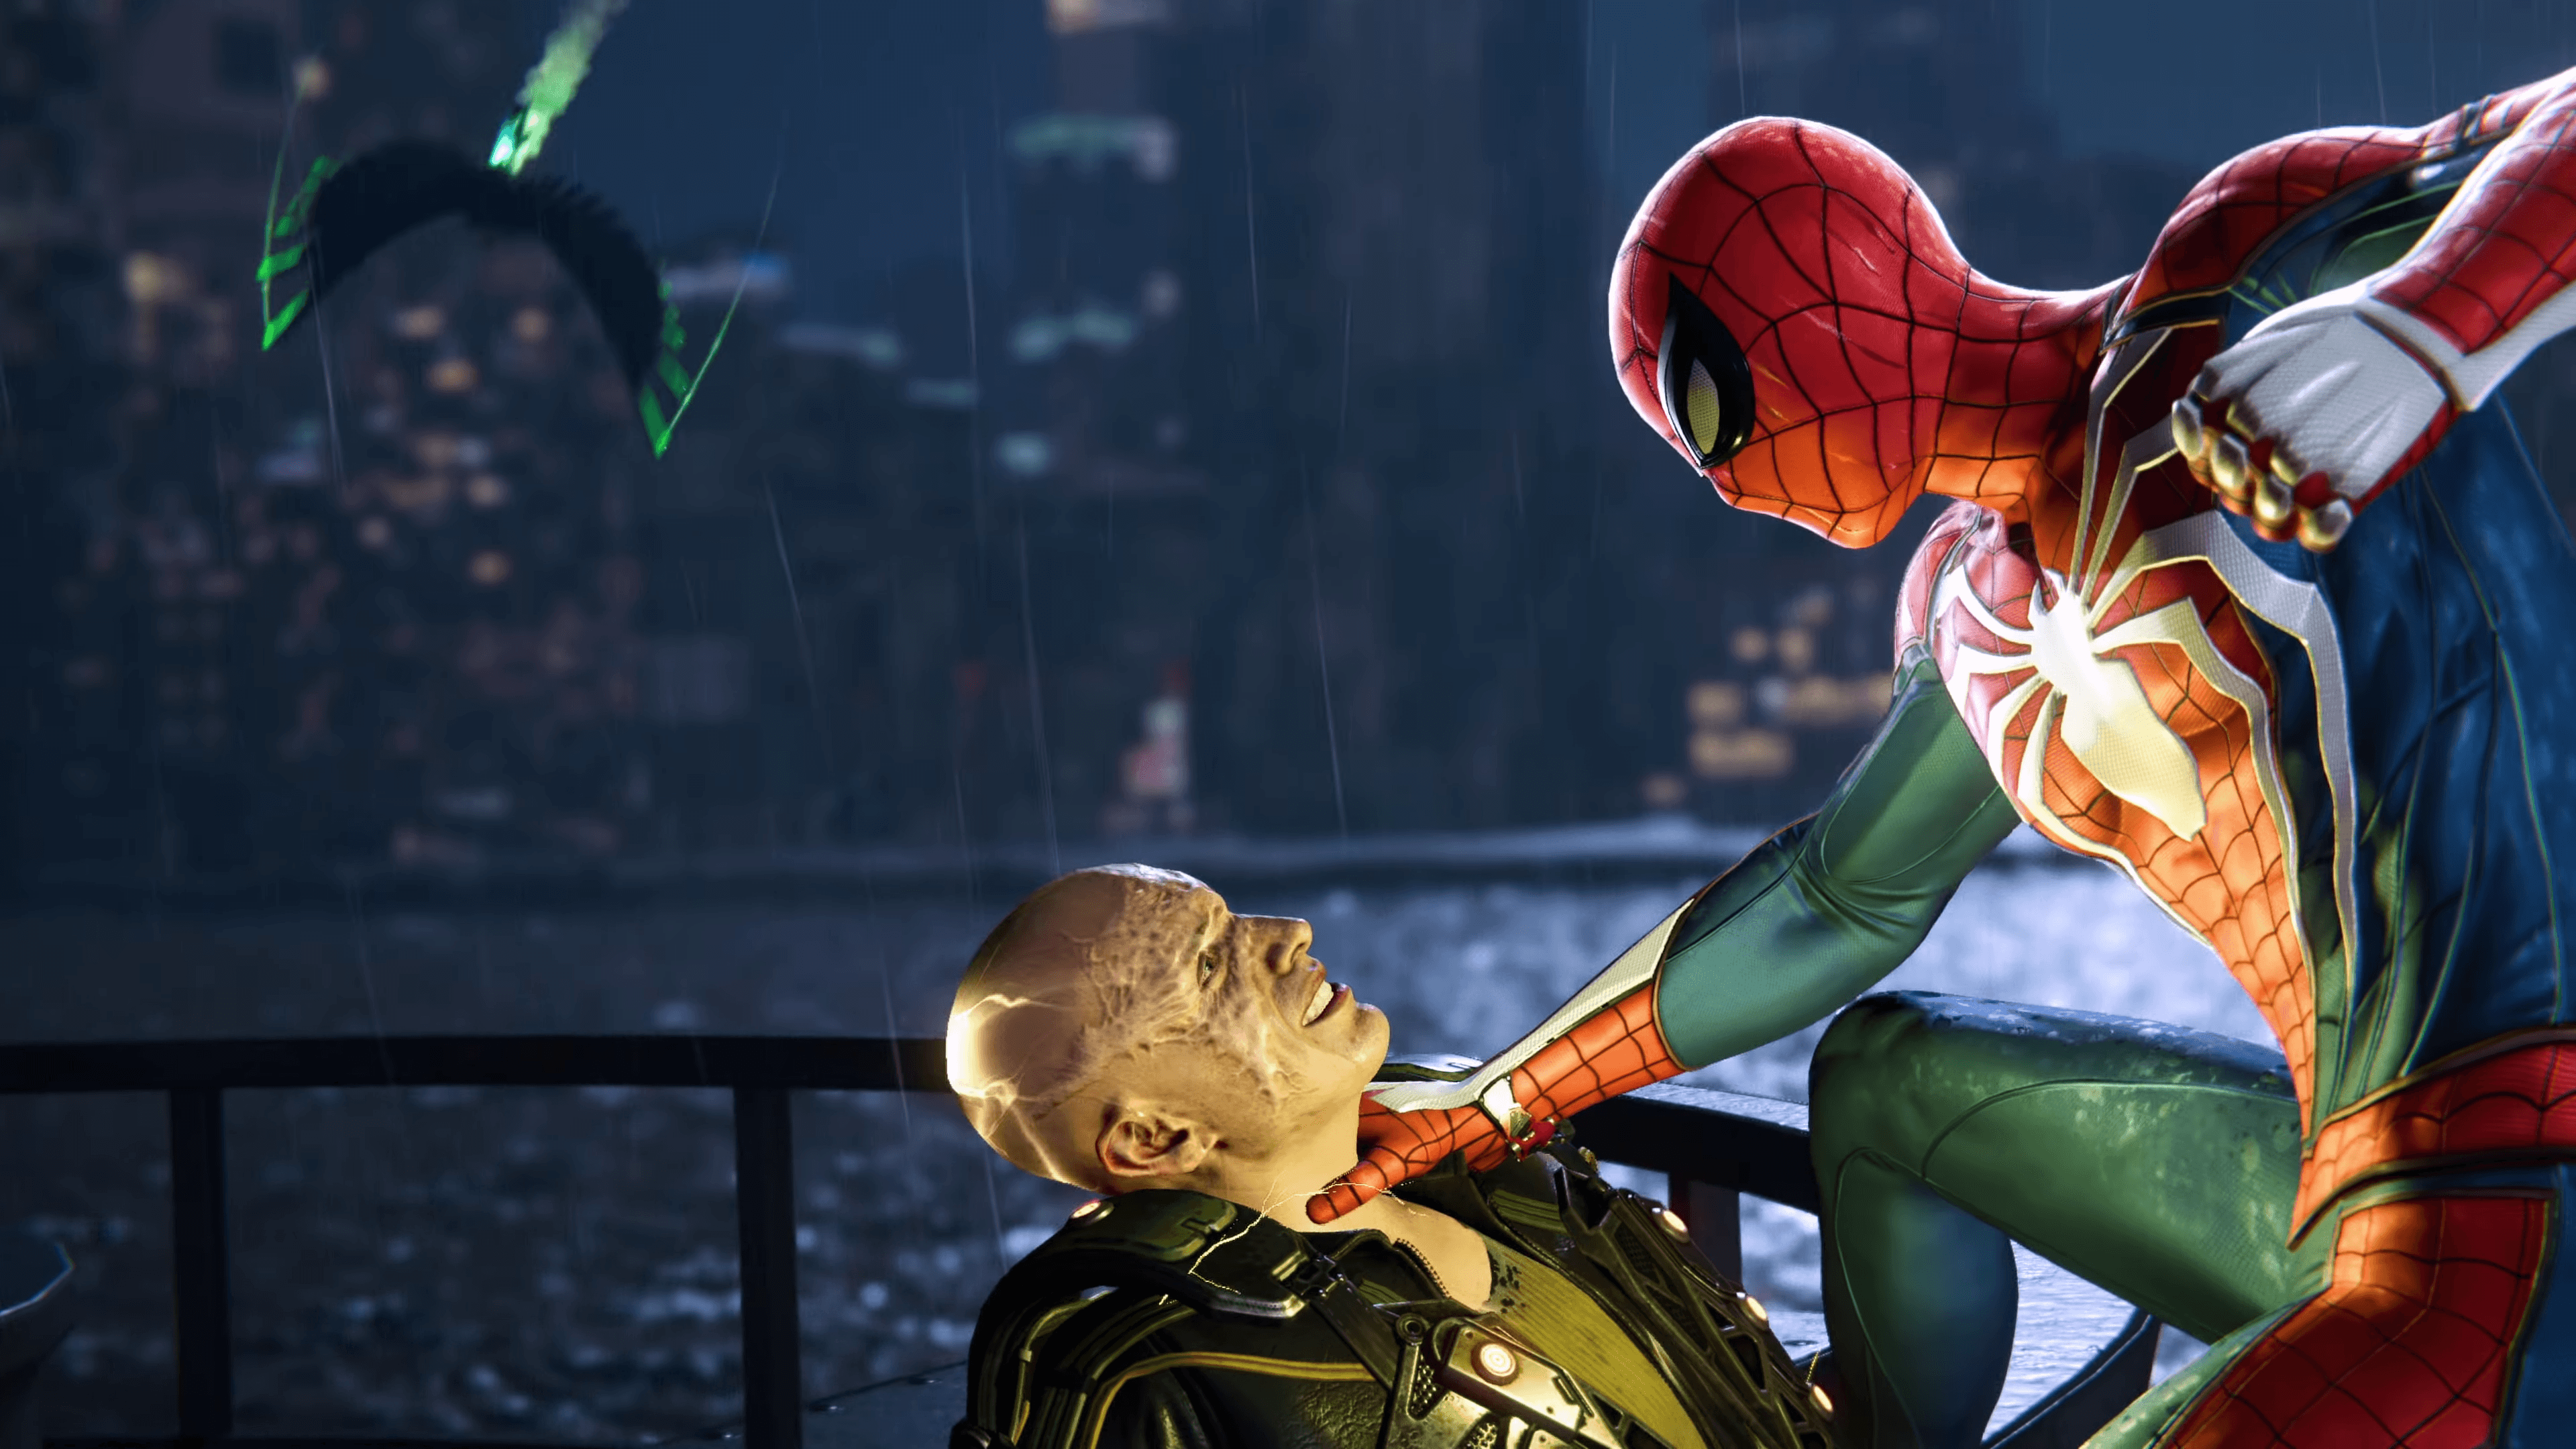 Spider Man (PS4) Wallpaper. HD Spider Man (PS4) Background